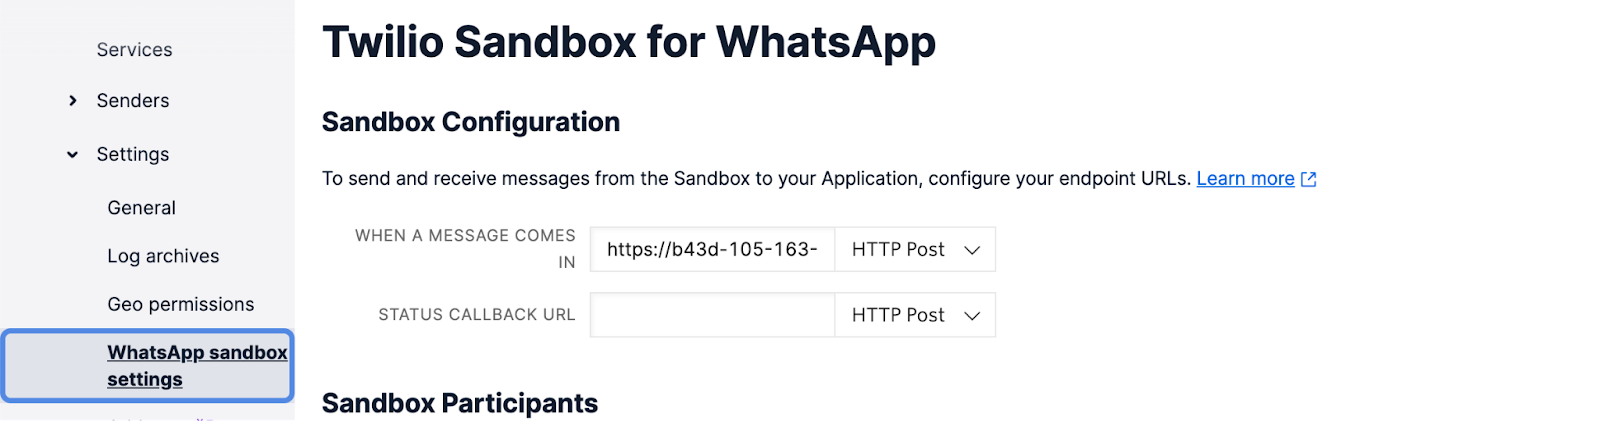 Configure the Twilio Sandbox for WhatsApp